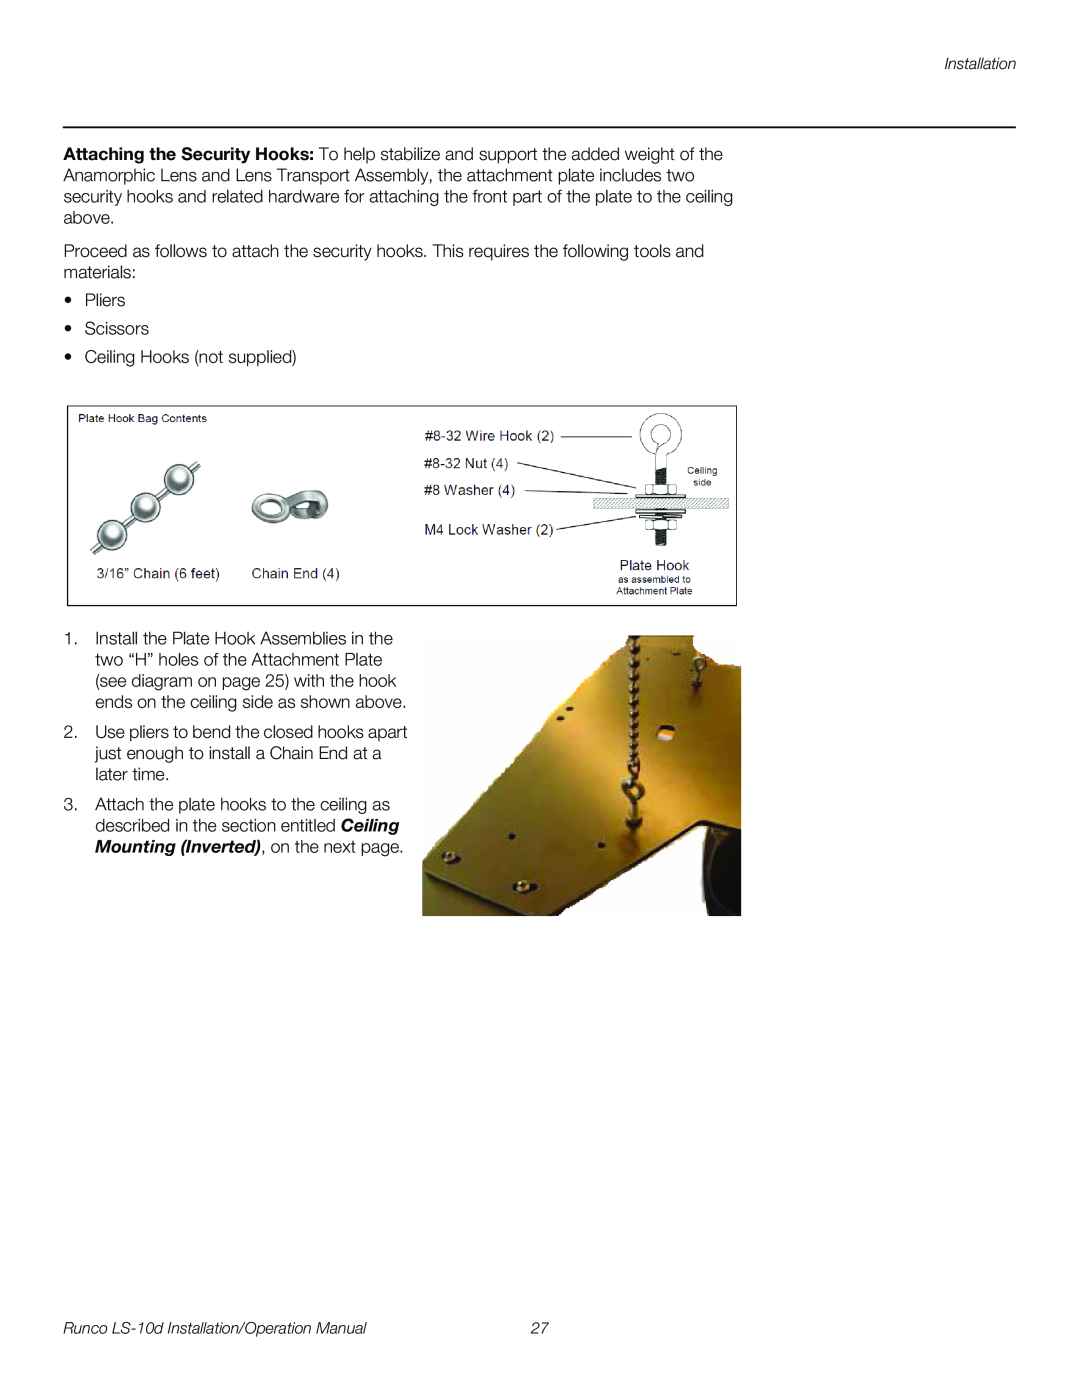 Runco LS-10D operation manual Pliers Scissors Ceiling Hooks not supplied 